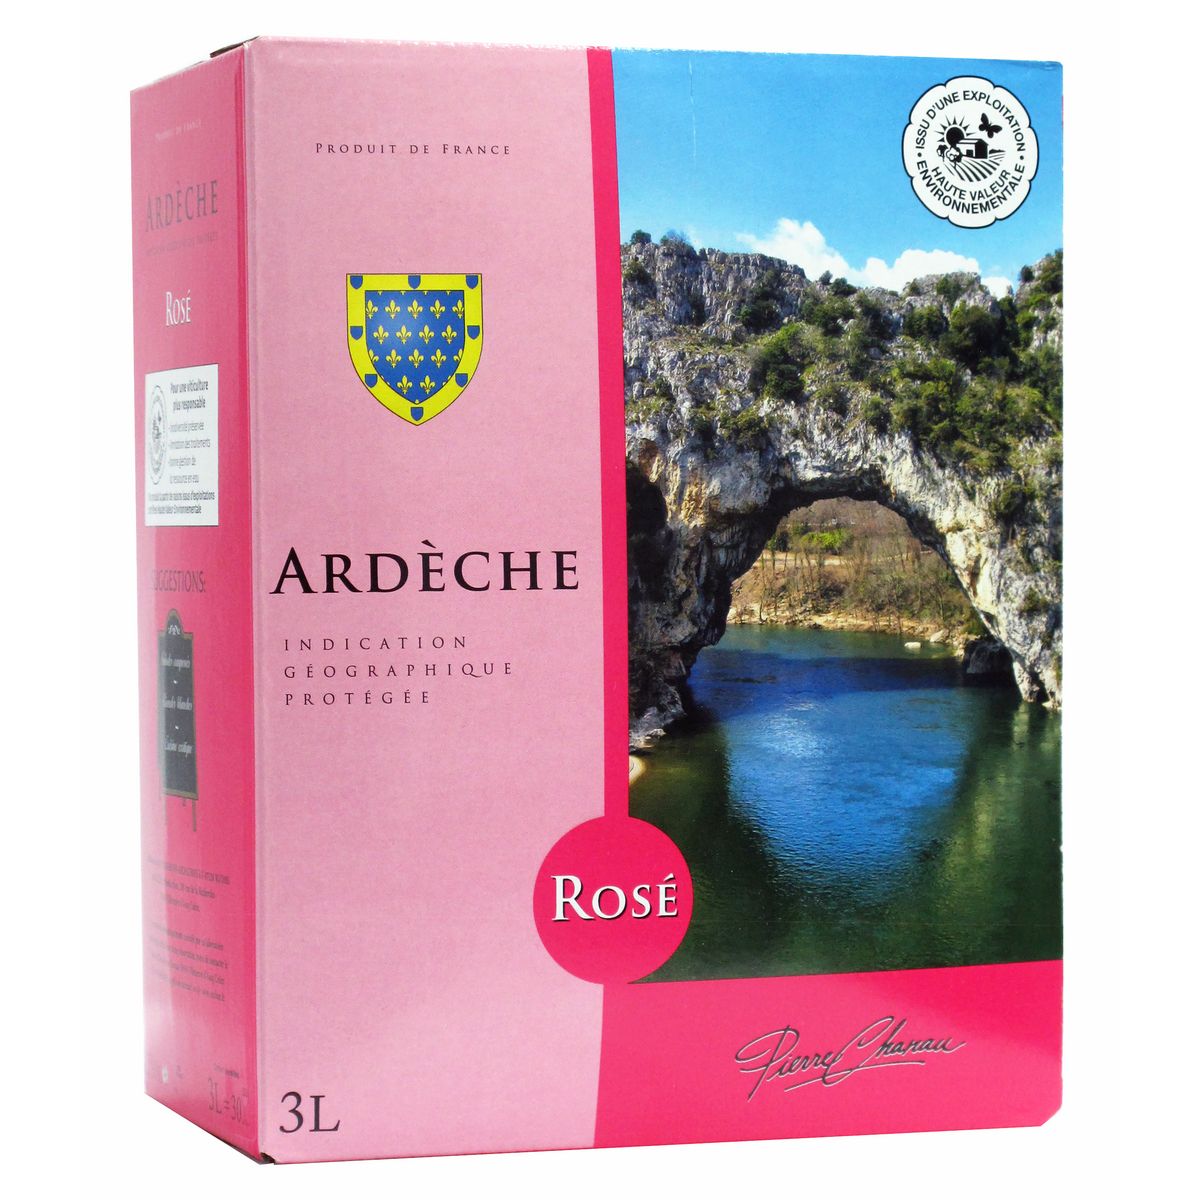 PIERRE CHANAU IGP Ardèche bib rosé Grand Format 3L